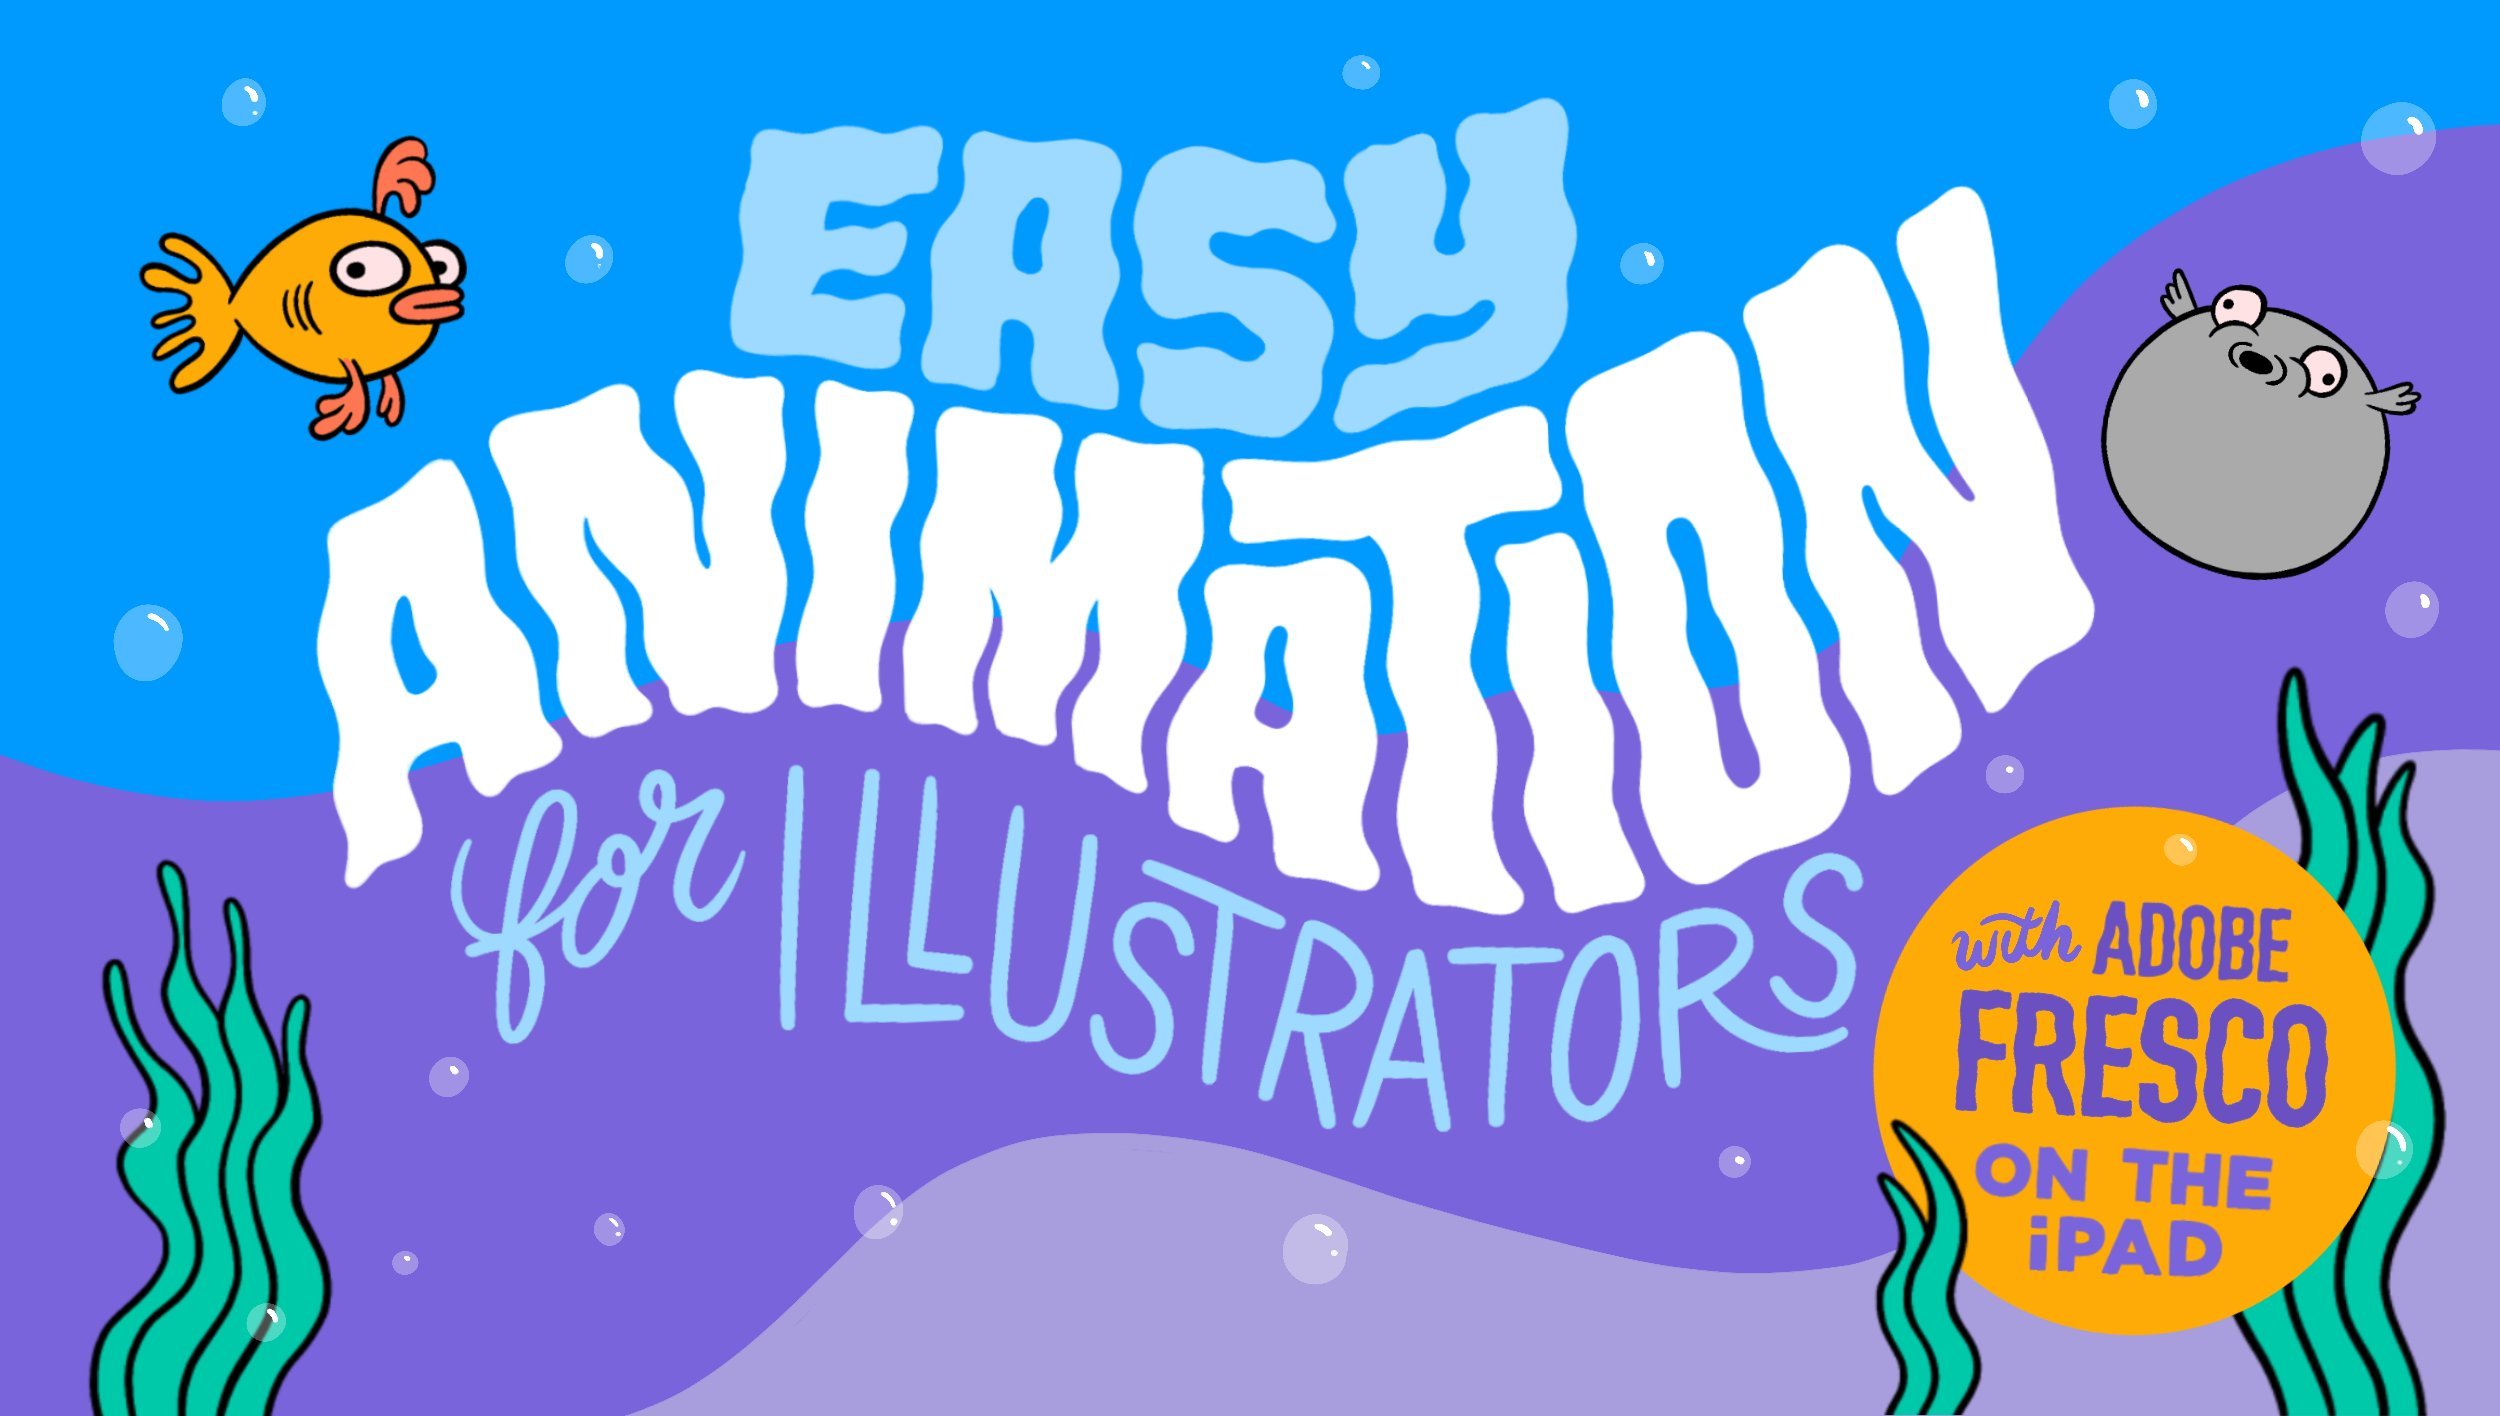 Easy Animation for Illustrators with Adobe Fresco on the iPad Skillshare Staff Pick